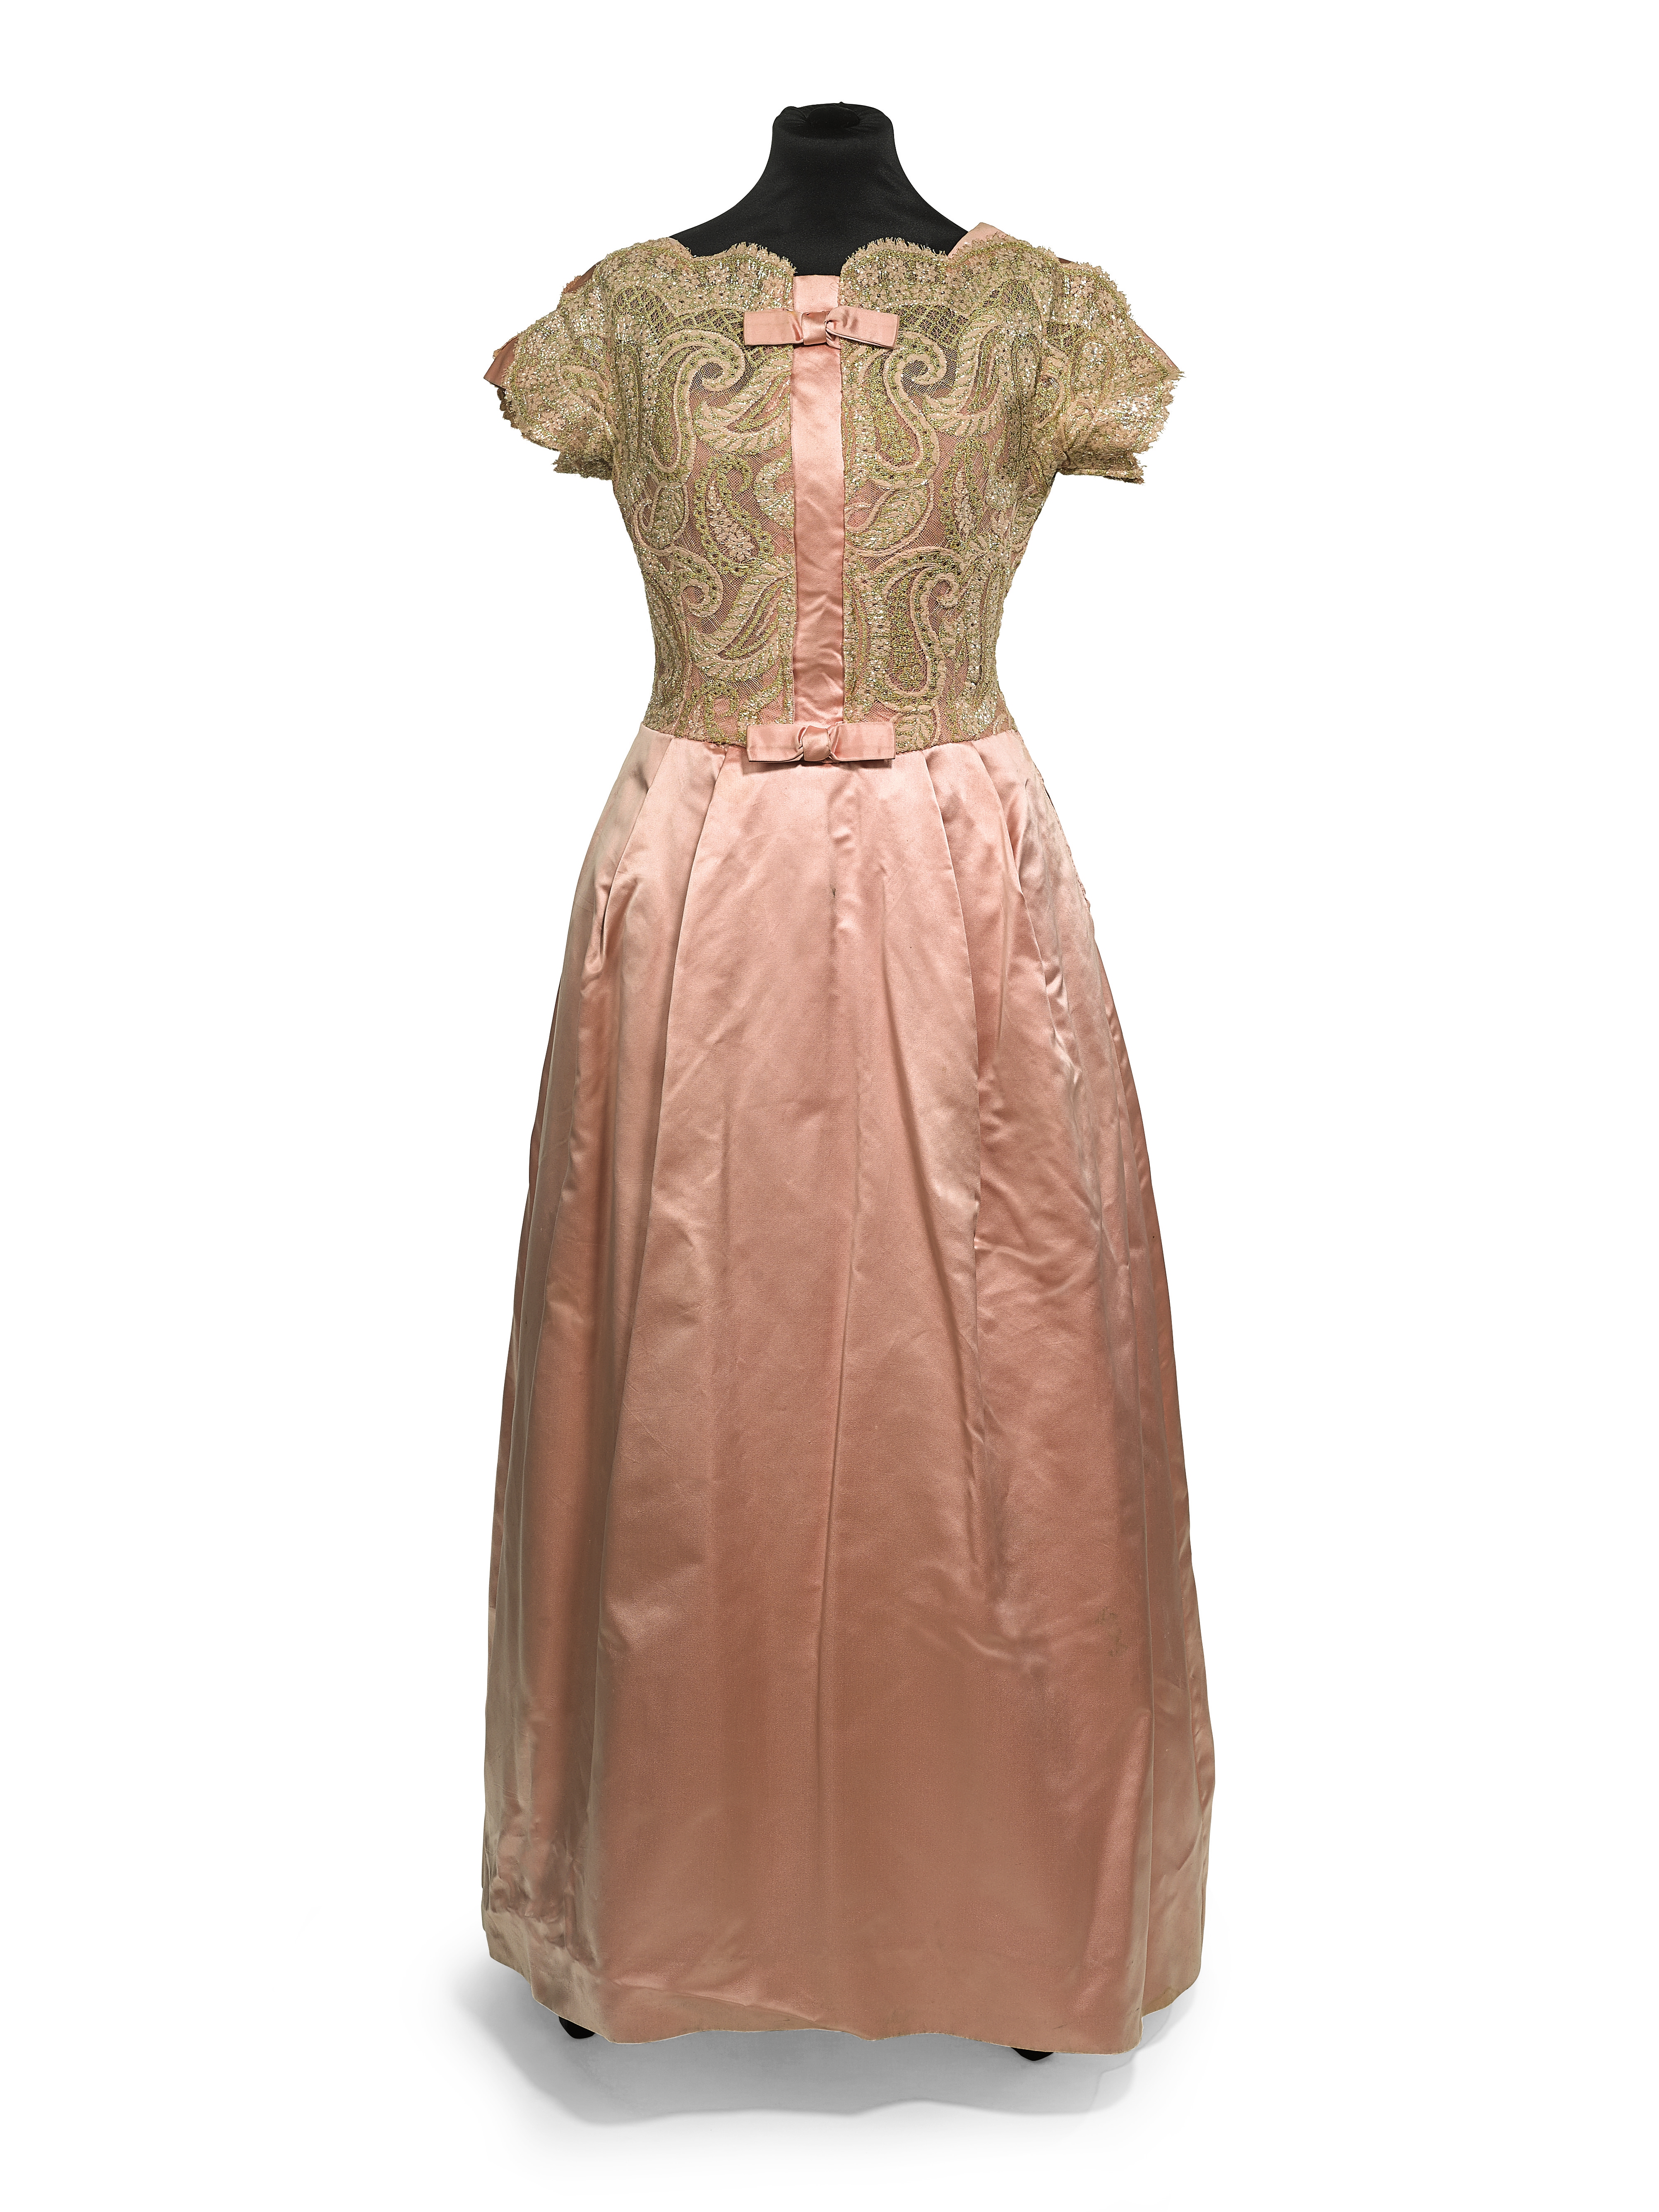 Pink evening dress (Sotheby's)